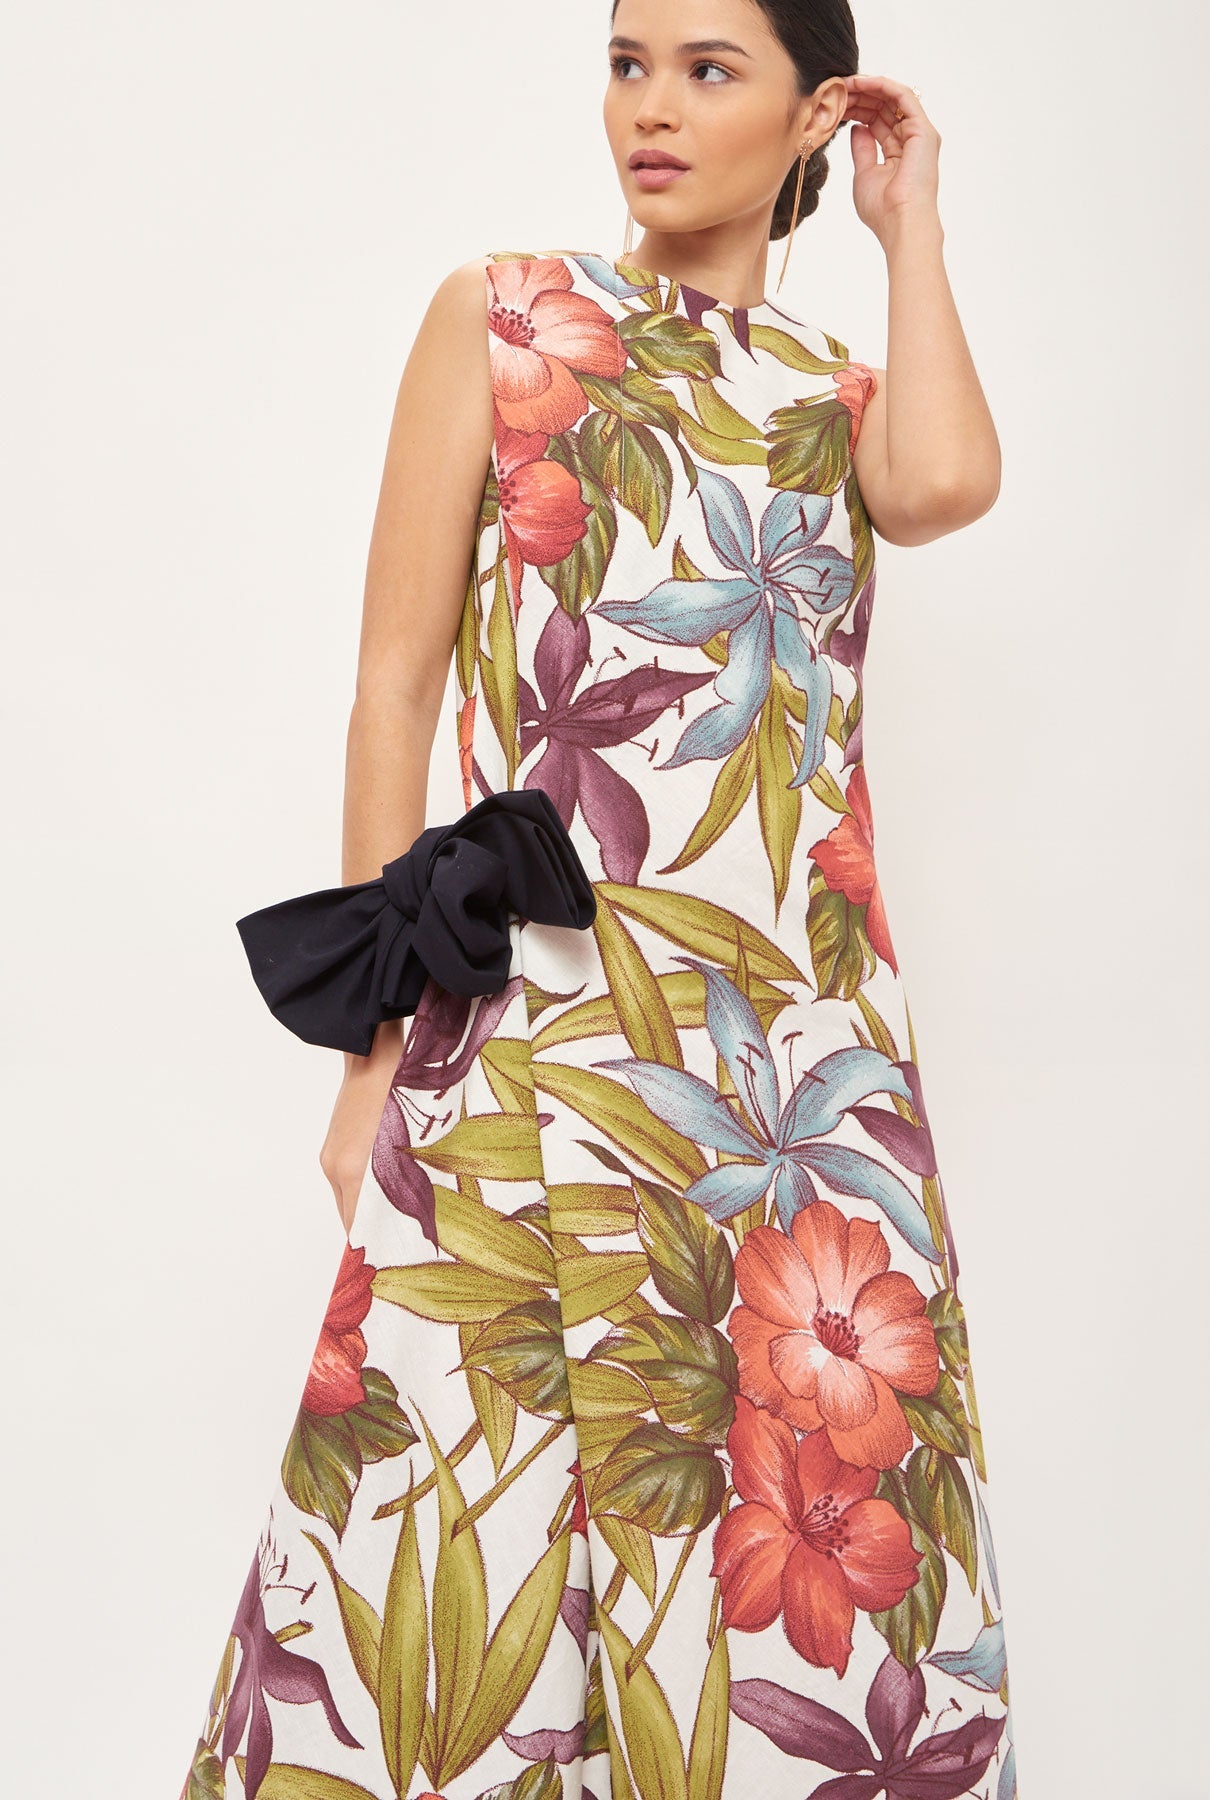 Vestido semientallado lazo flores - Made to order dress Devota & Lomba 